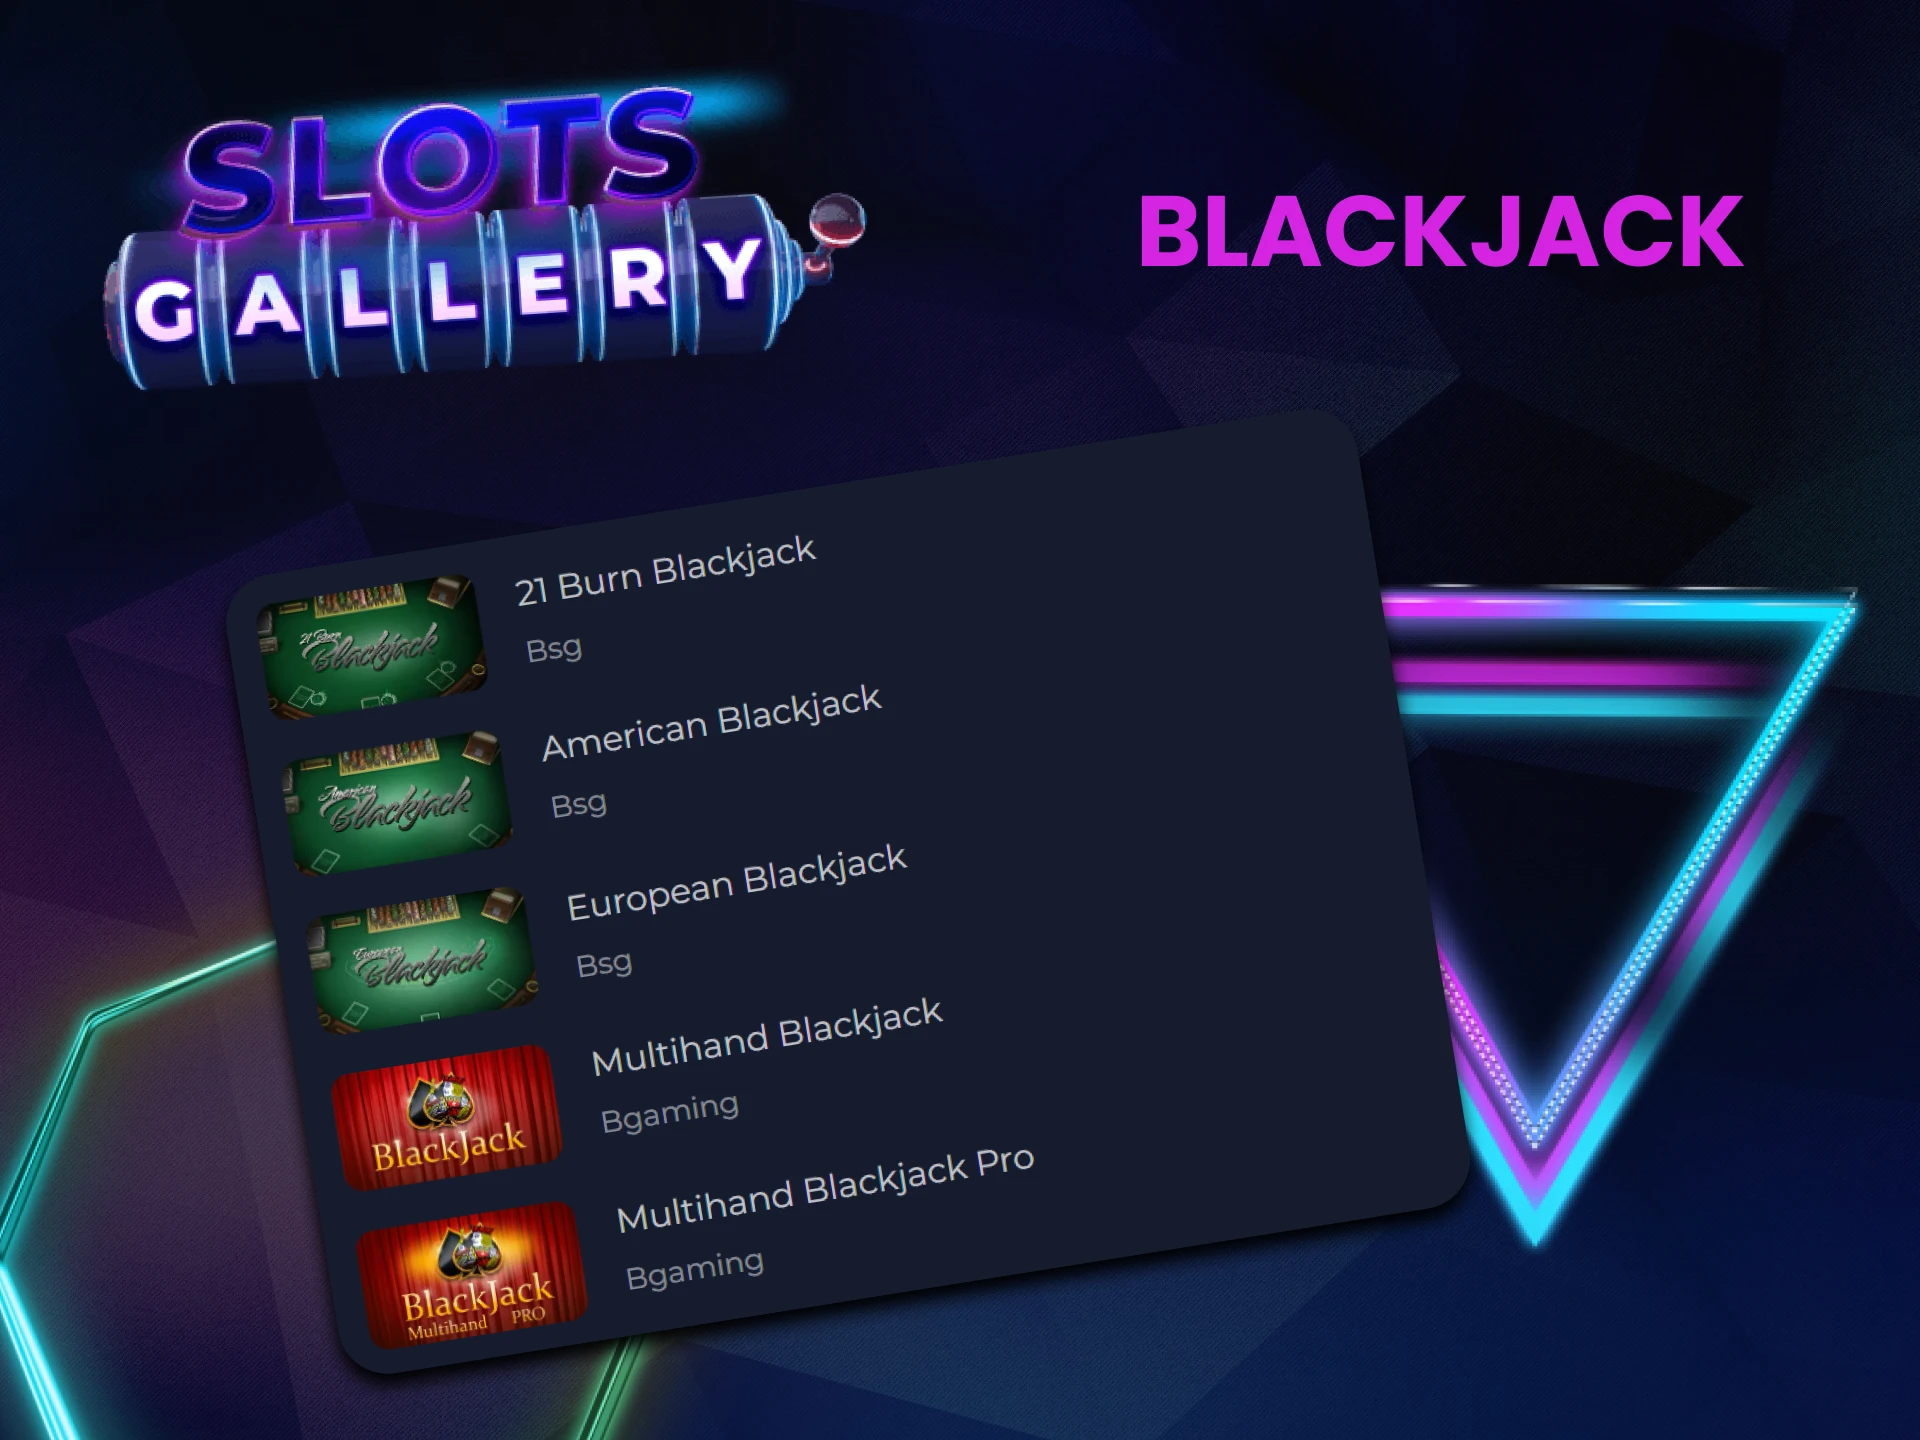 To play at Slots Gallery, choose Blackjack.